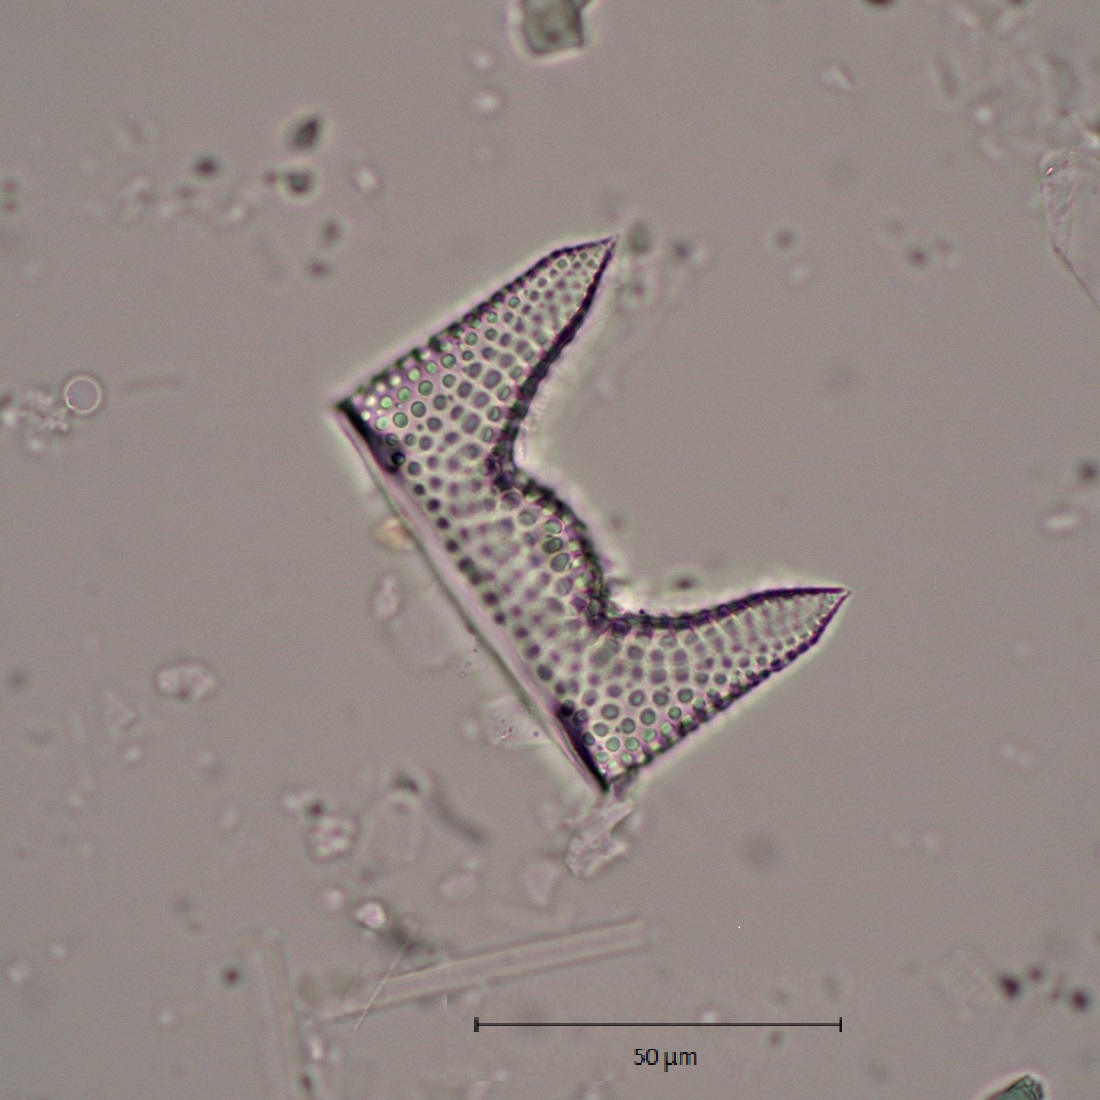 A photo of an Antarctic diatom under a microscope